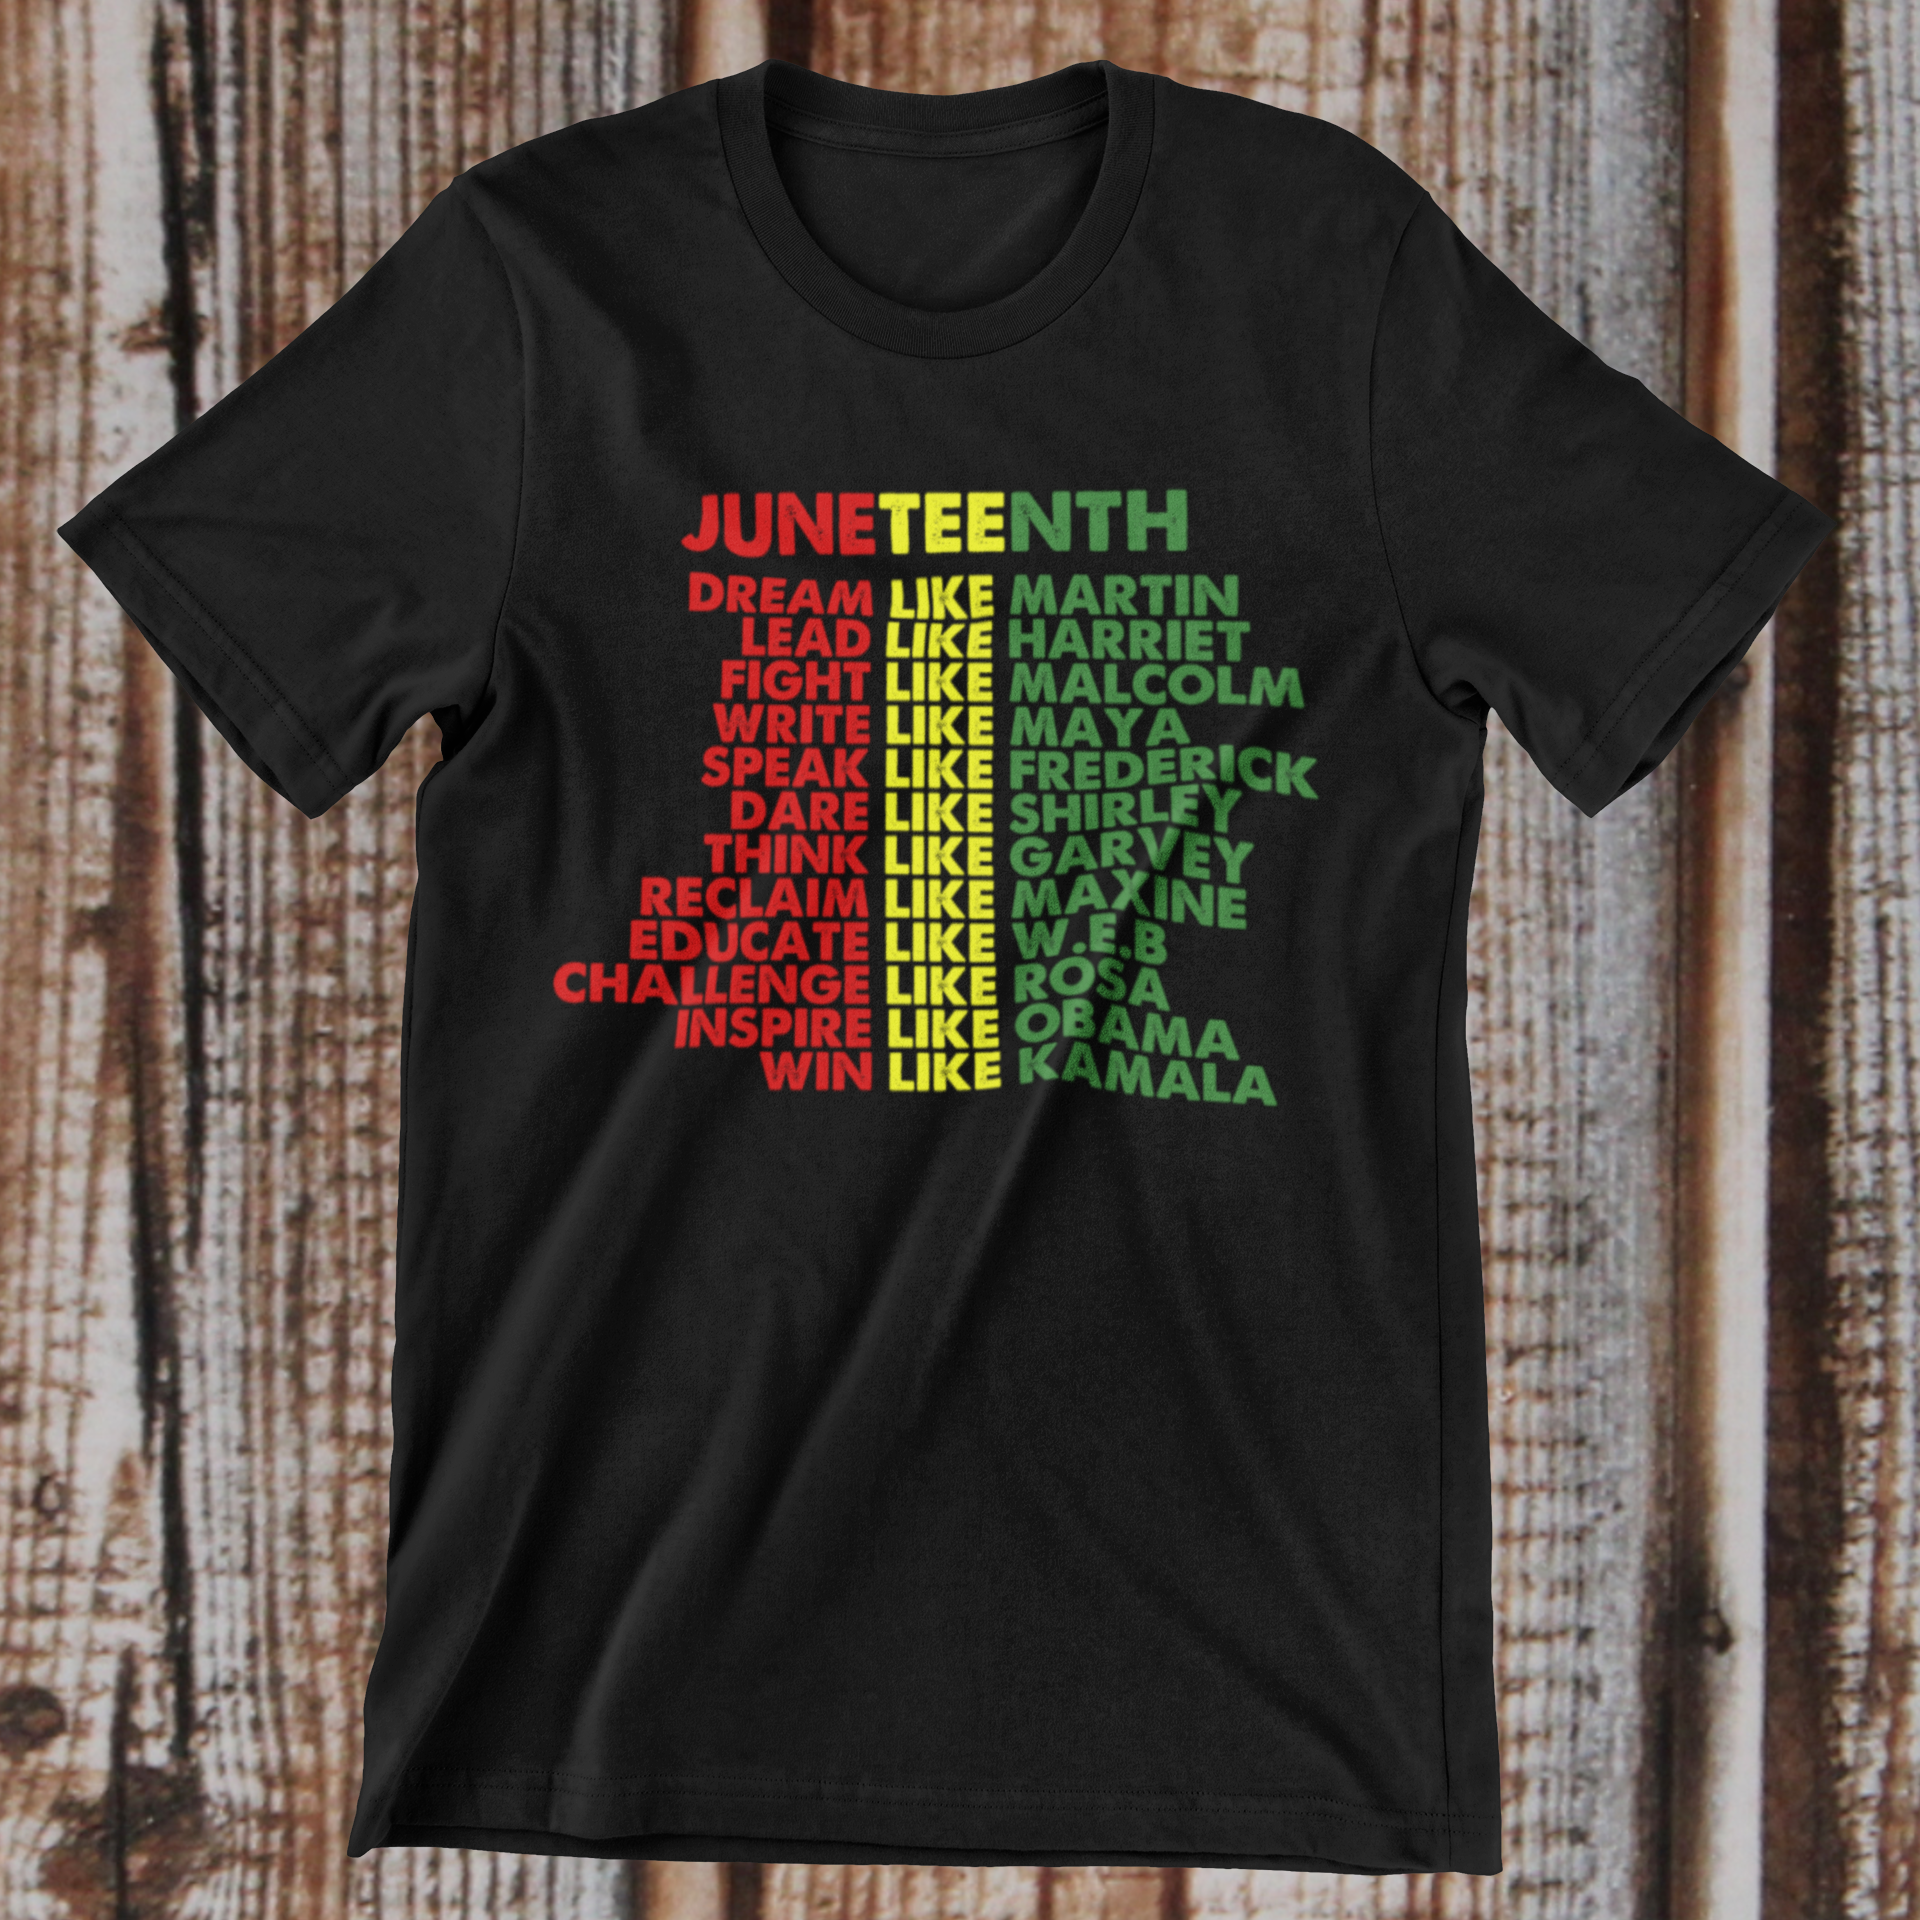 Juneteenth Tshirt, Juneteenth Shirt For Women Men Kids, Juneteenth, Black  History Tee, independence day shirt, Black Leaders, June 19 1865